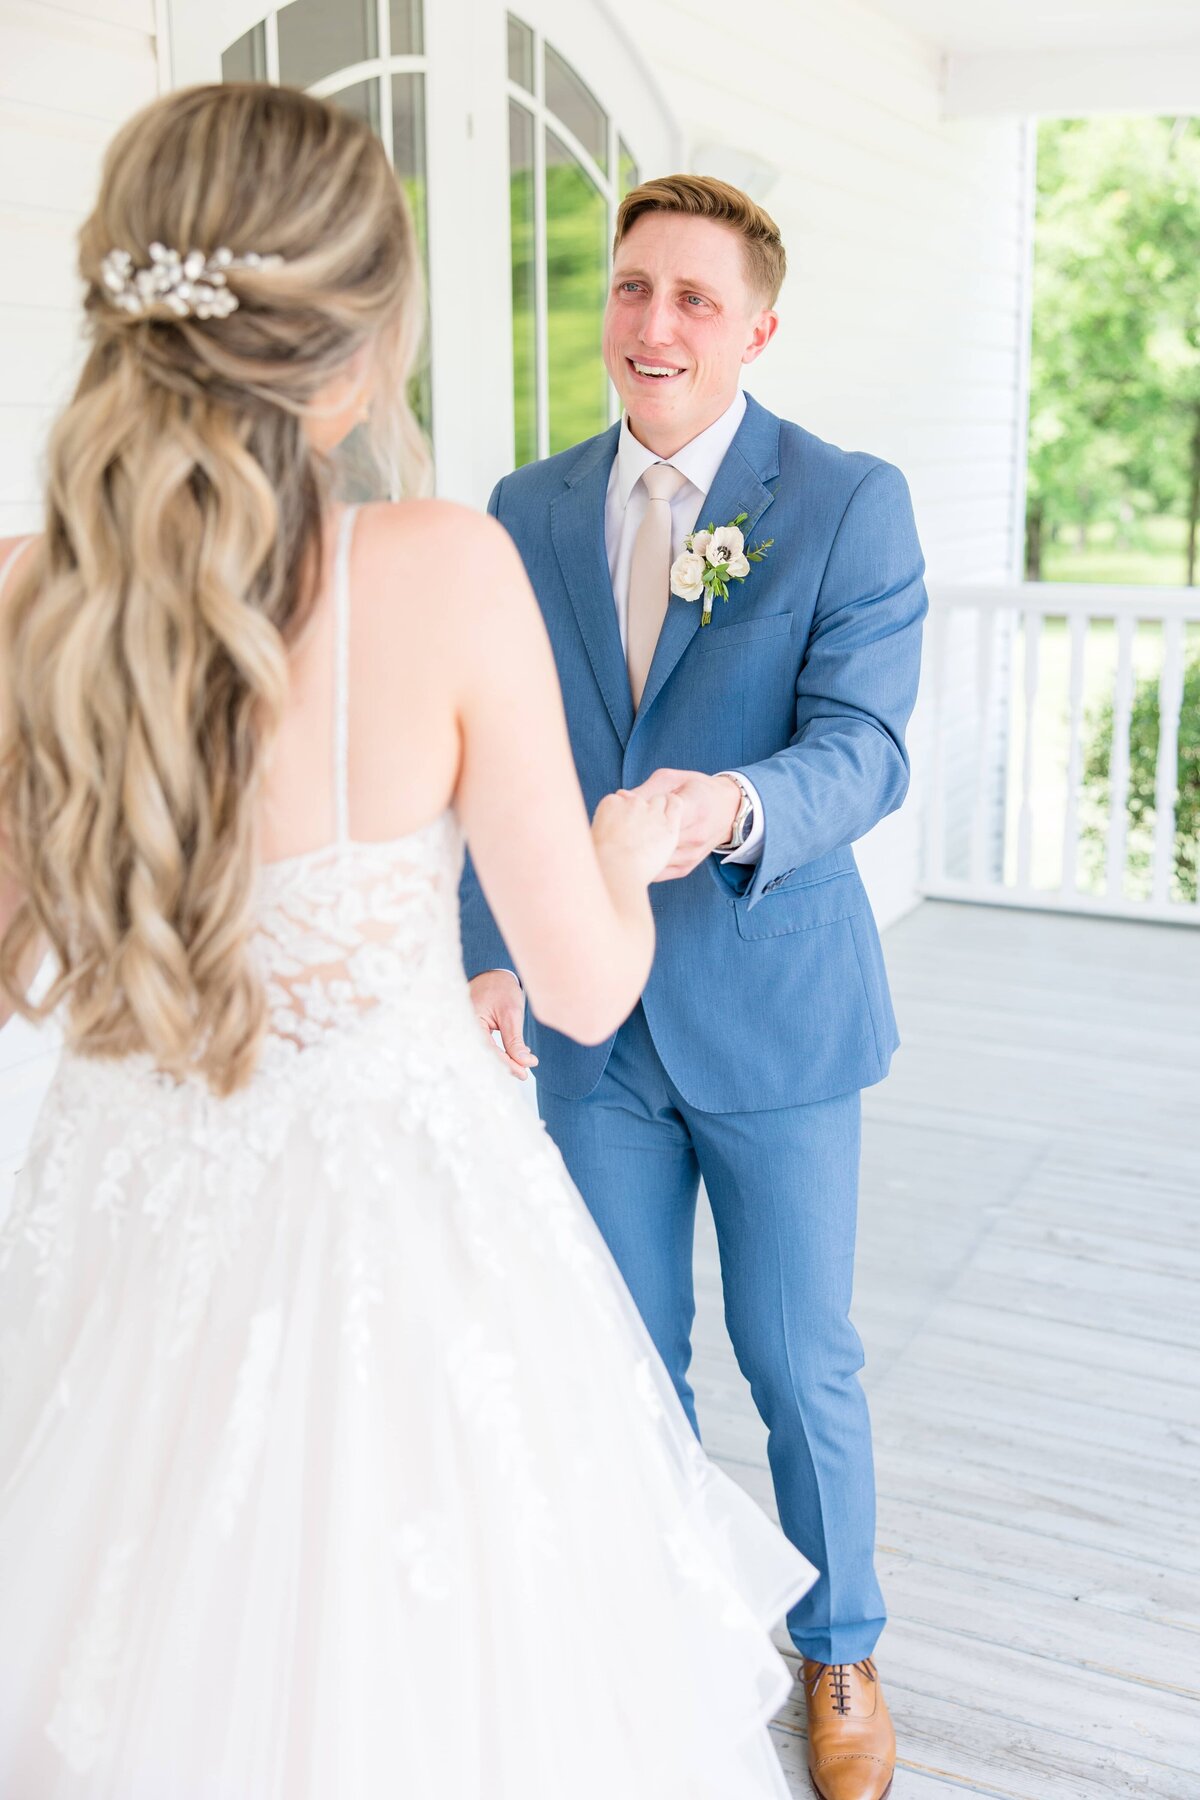 Samantha & Connor's Spring Wedding at the Sonnet House - Katie & Alec Photography Birmingham, Alabama Wedding Photographers 32